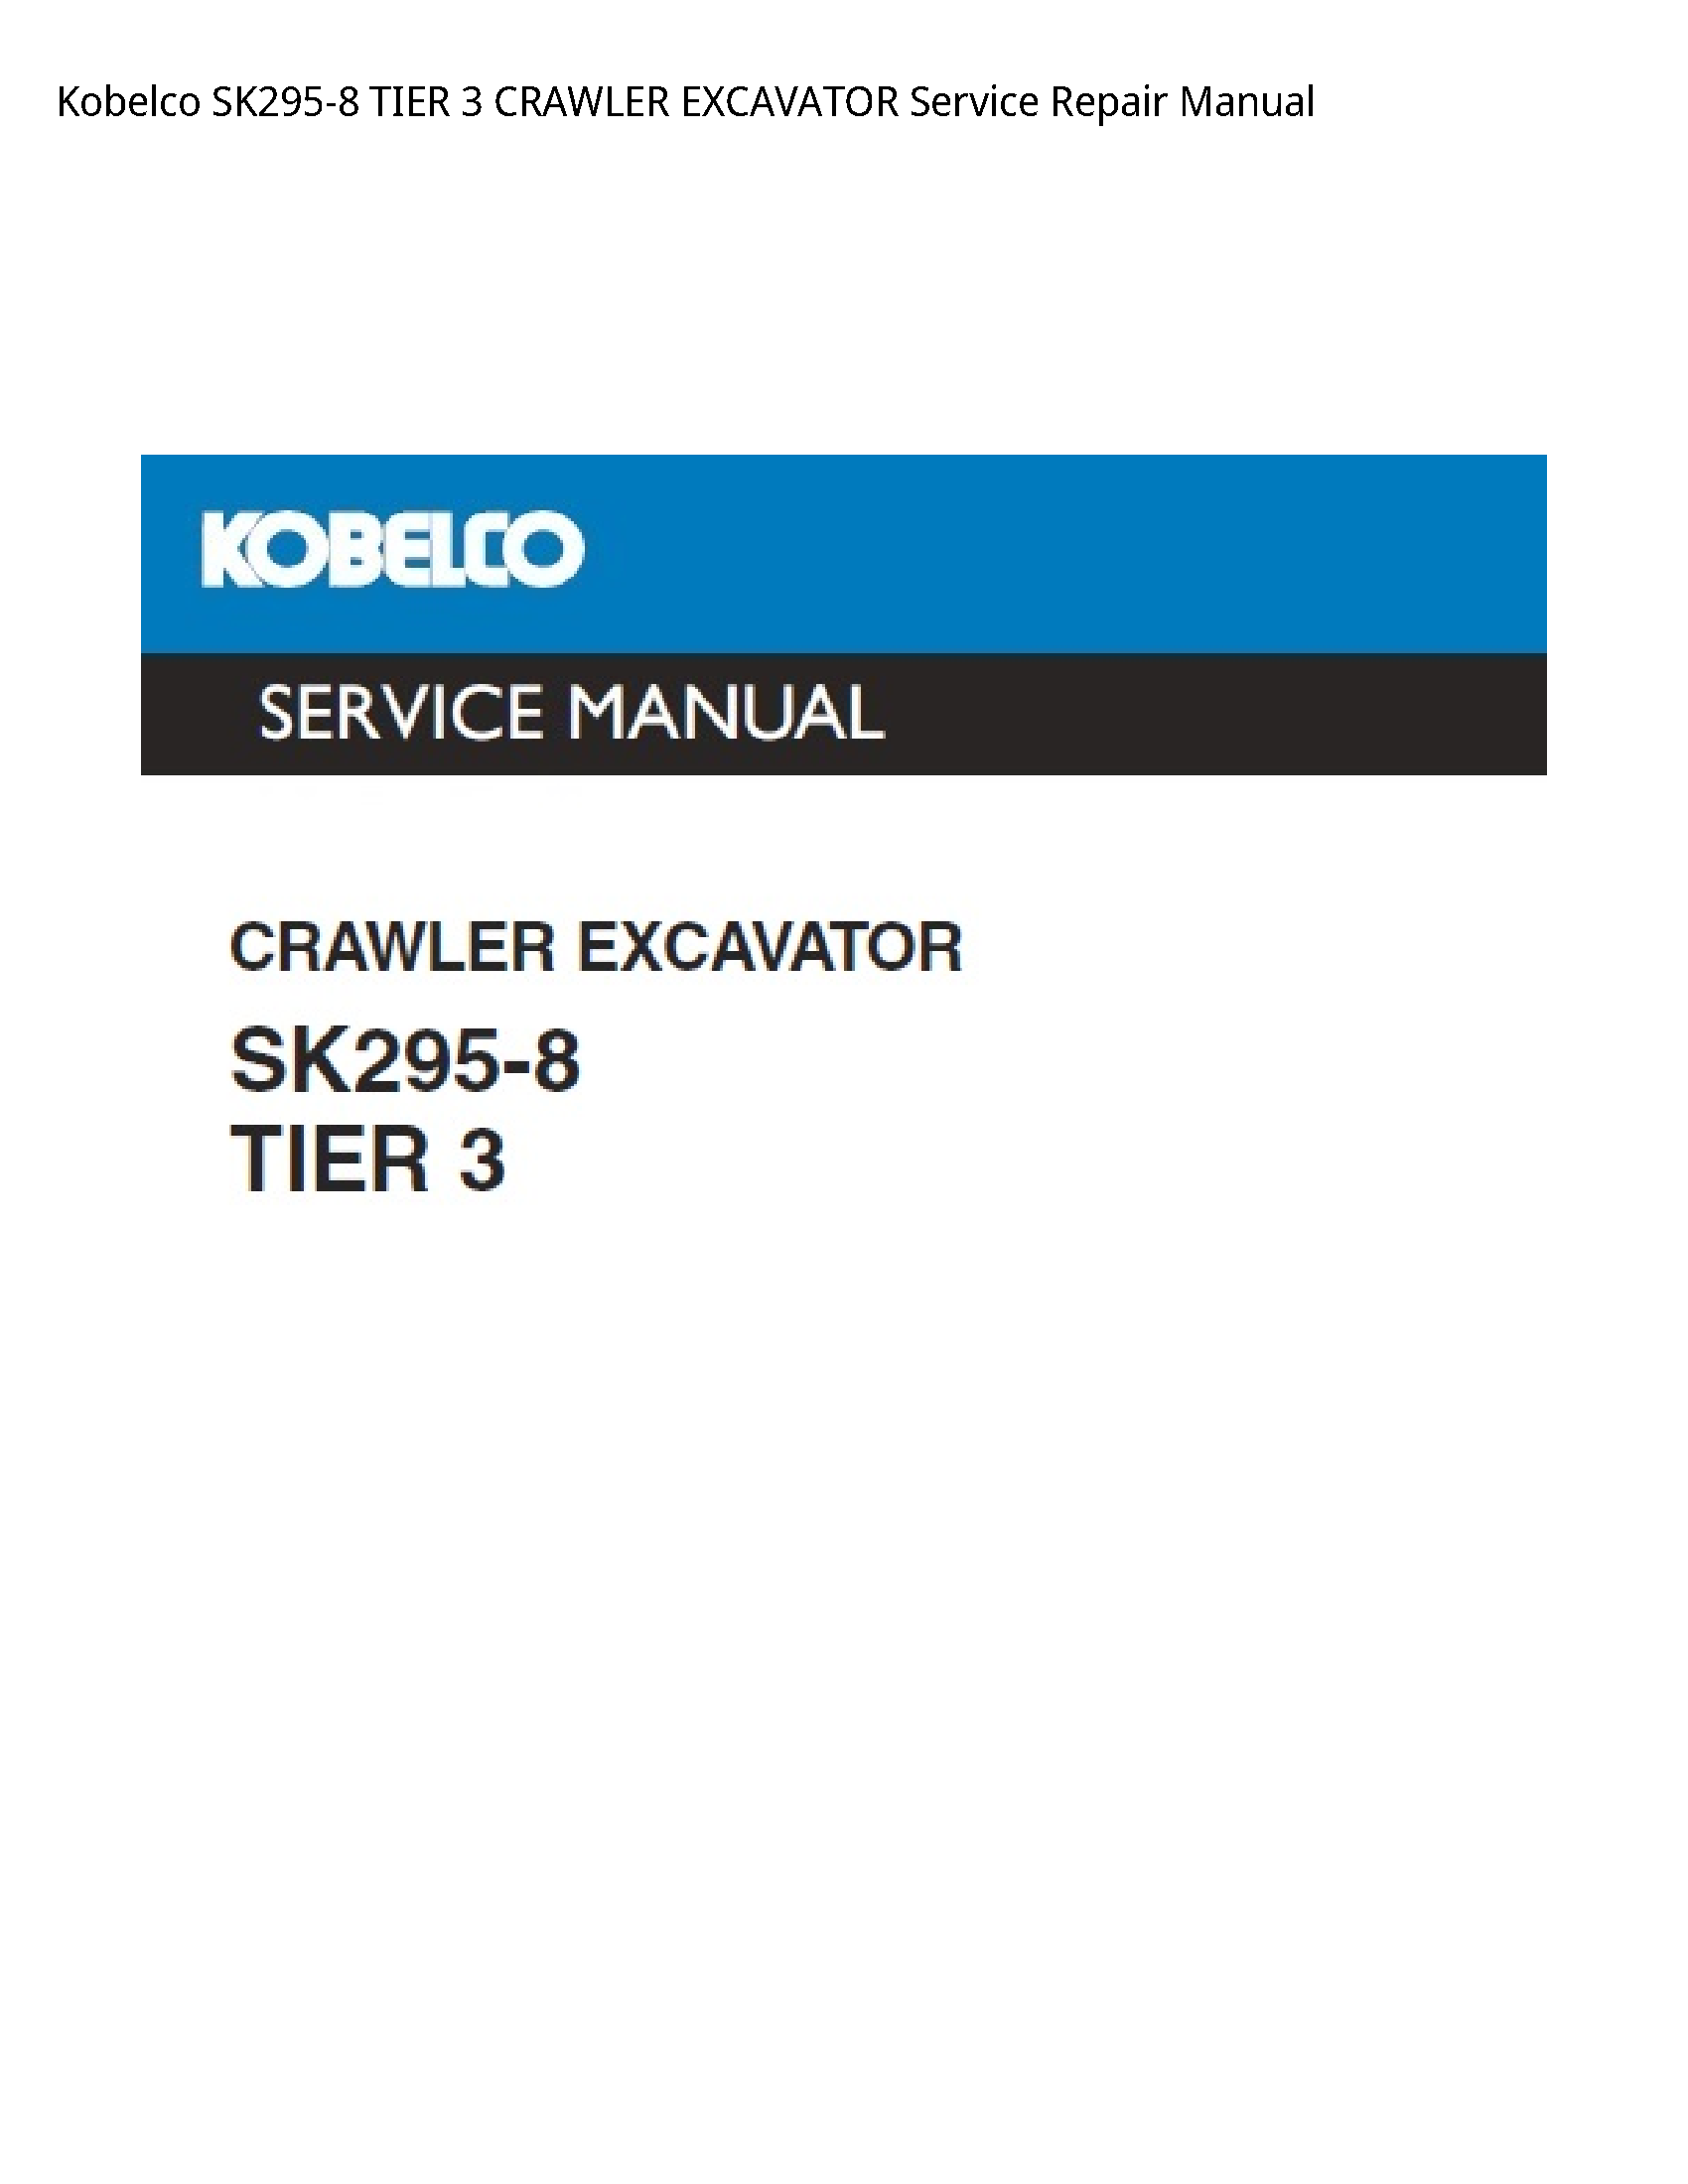 Kobelco SK295-8 TIER CRAWLER EXCAVATOR manual